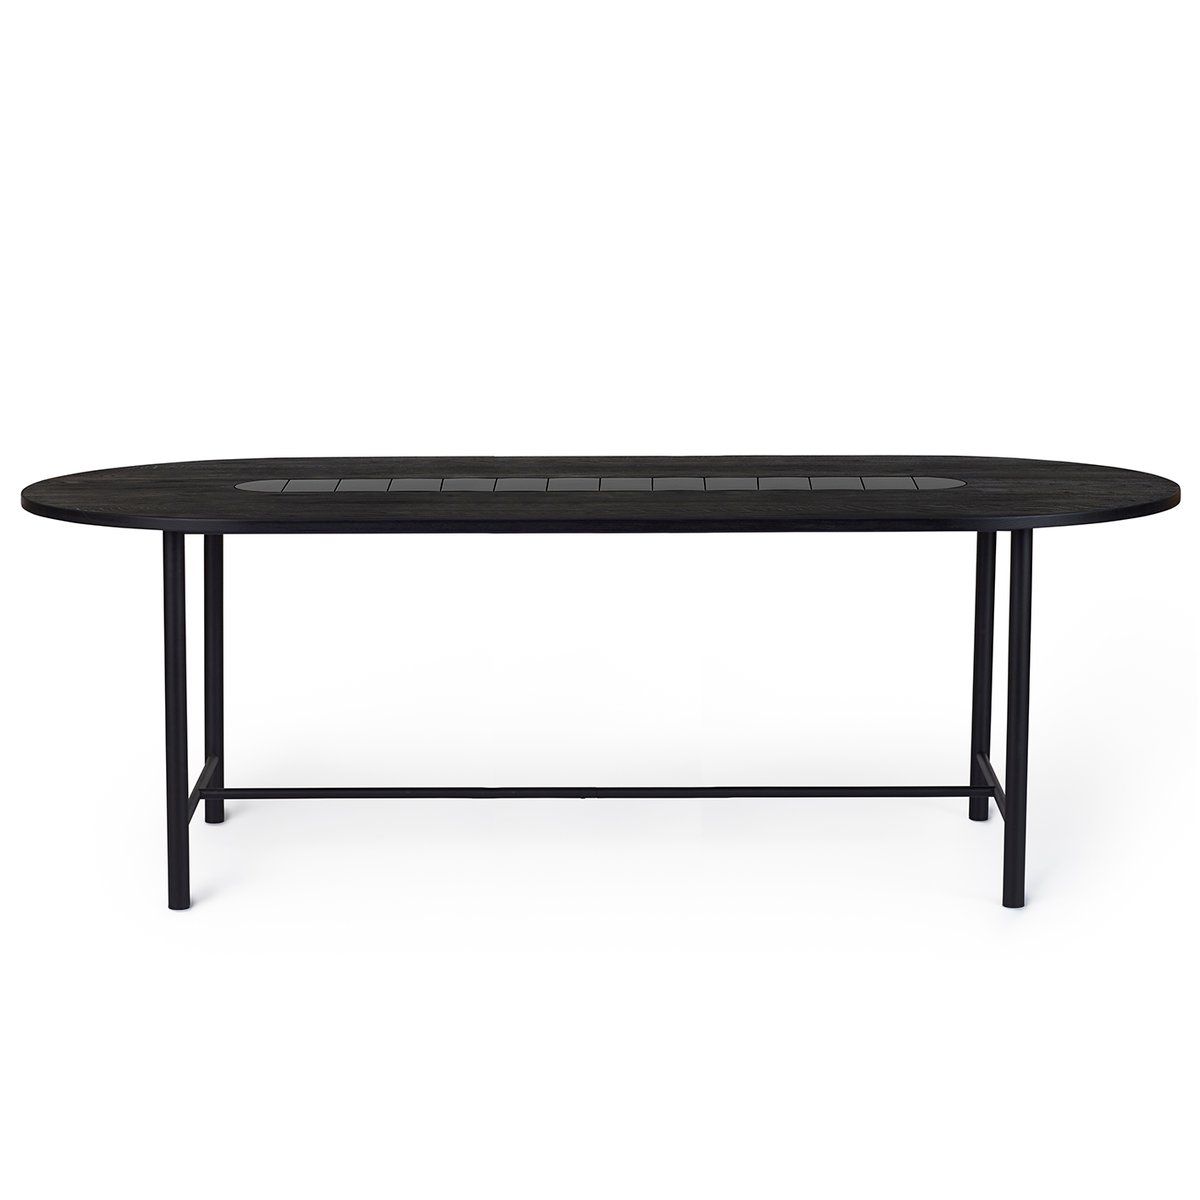 Warm Nordic Be My Guest tafel 220 cm Zwartgeolied eikenhout-zwart